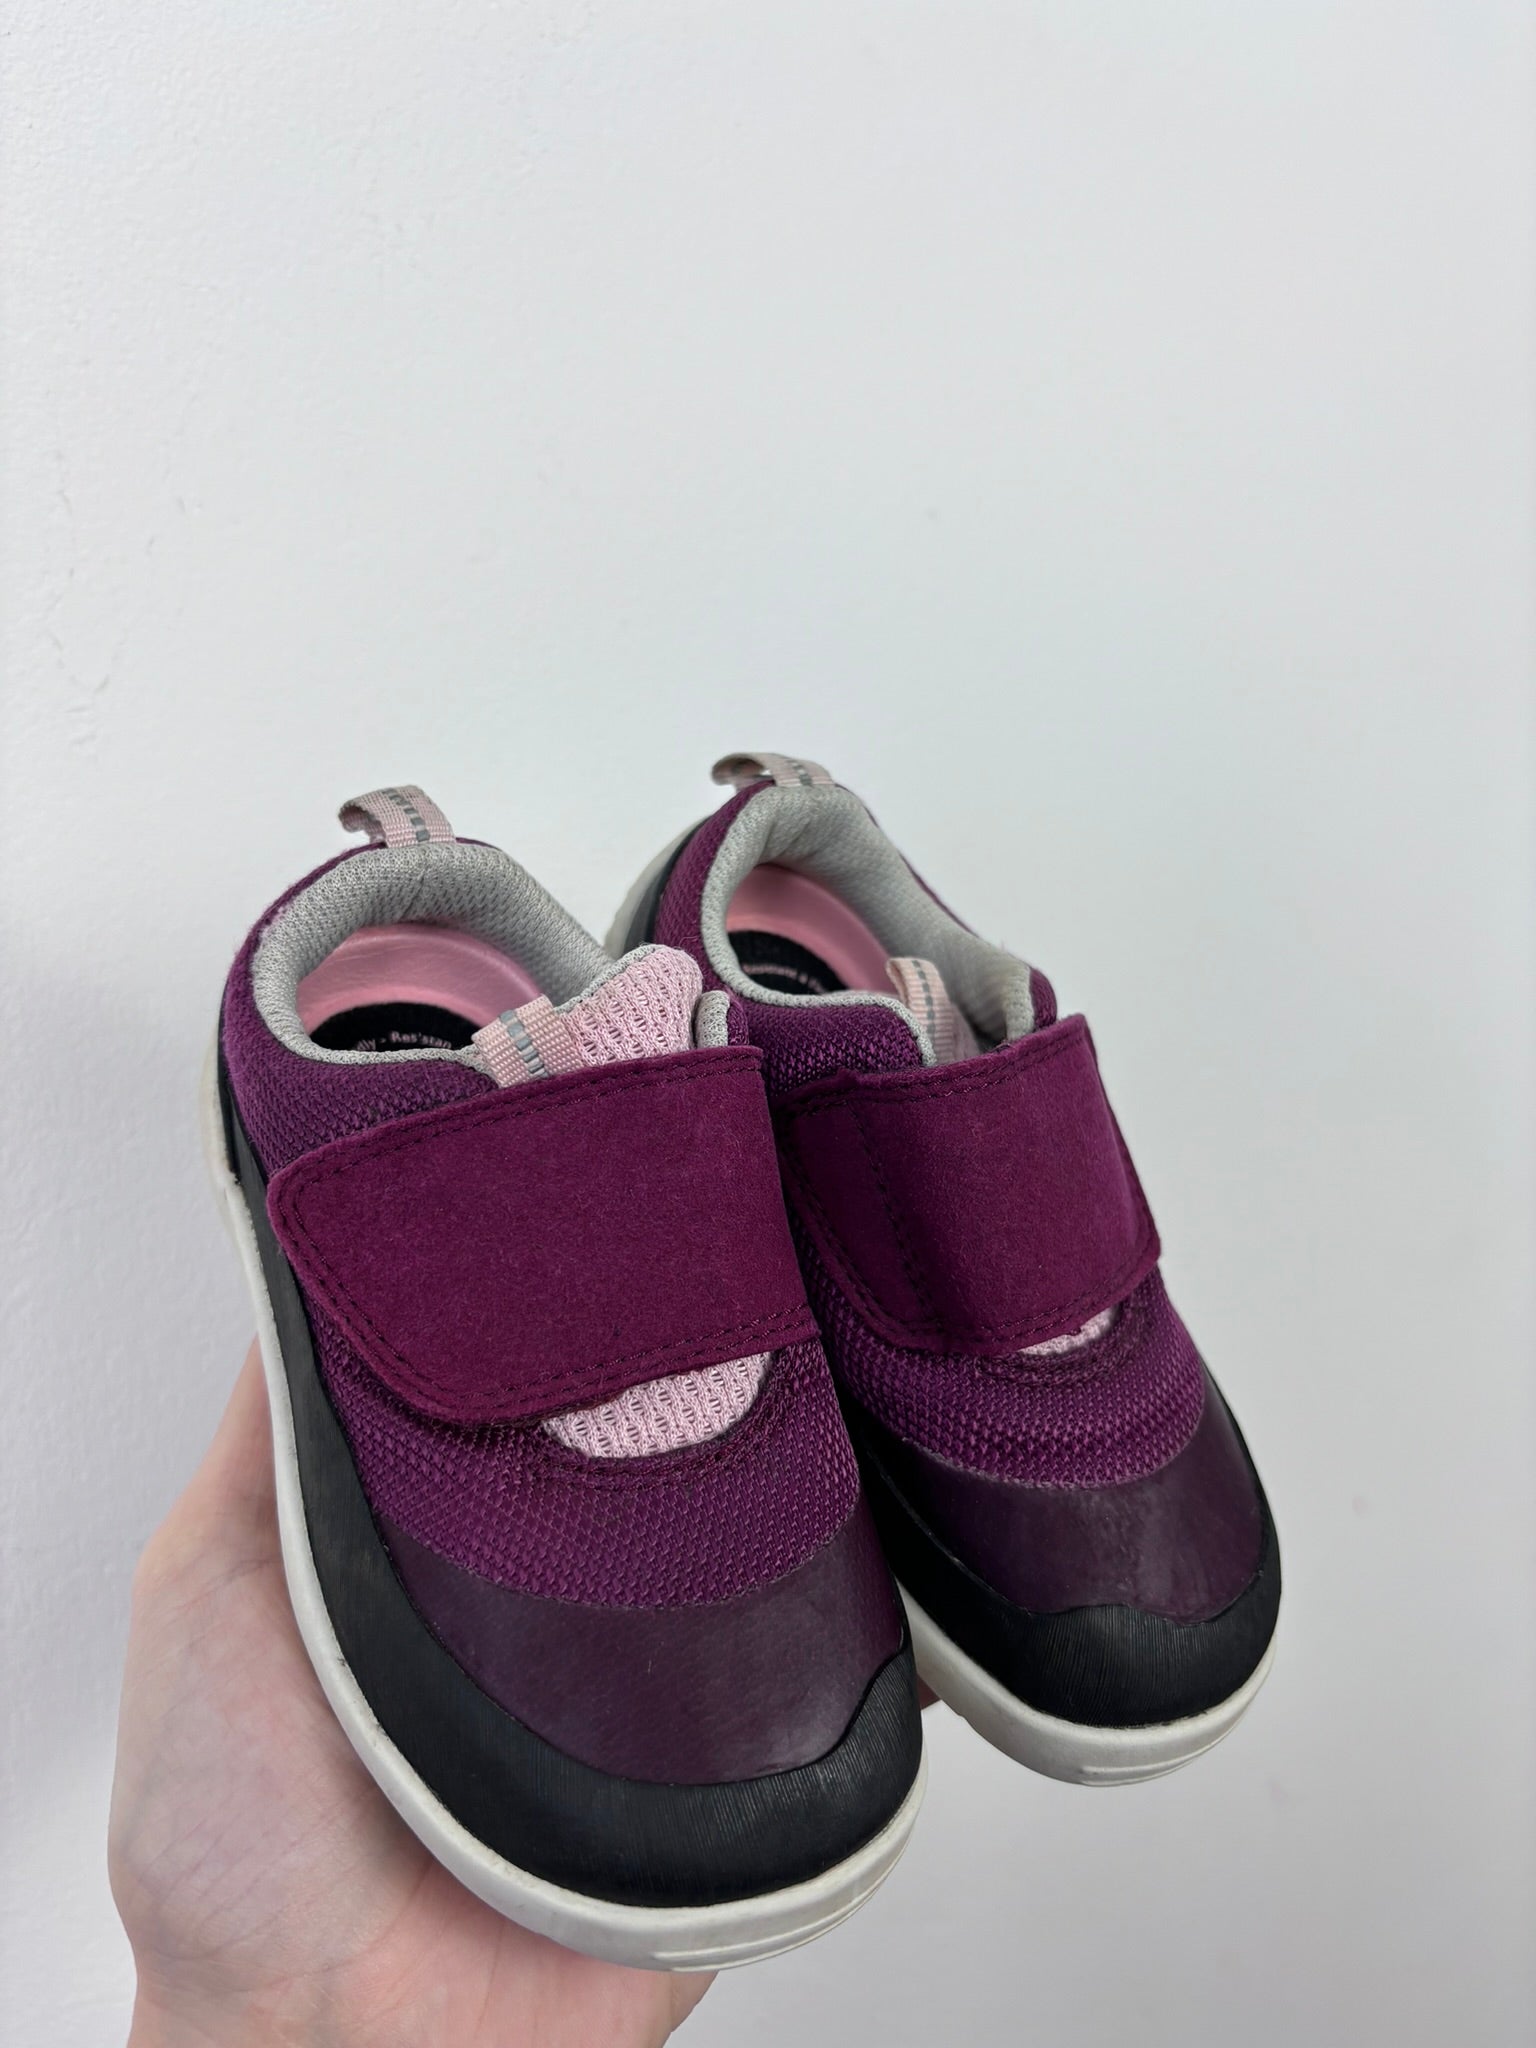 Clarks UK 5 G-Shoes-Second Snuggle Preloved